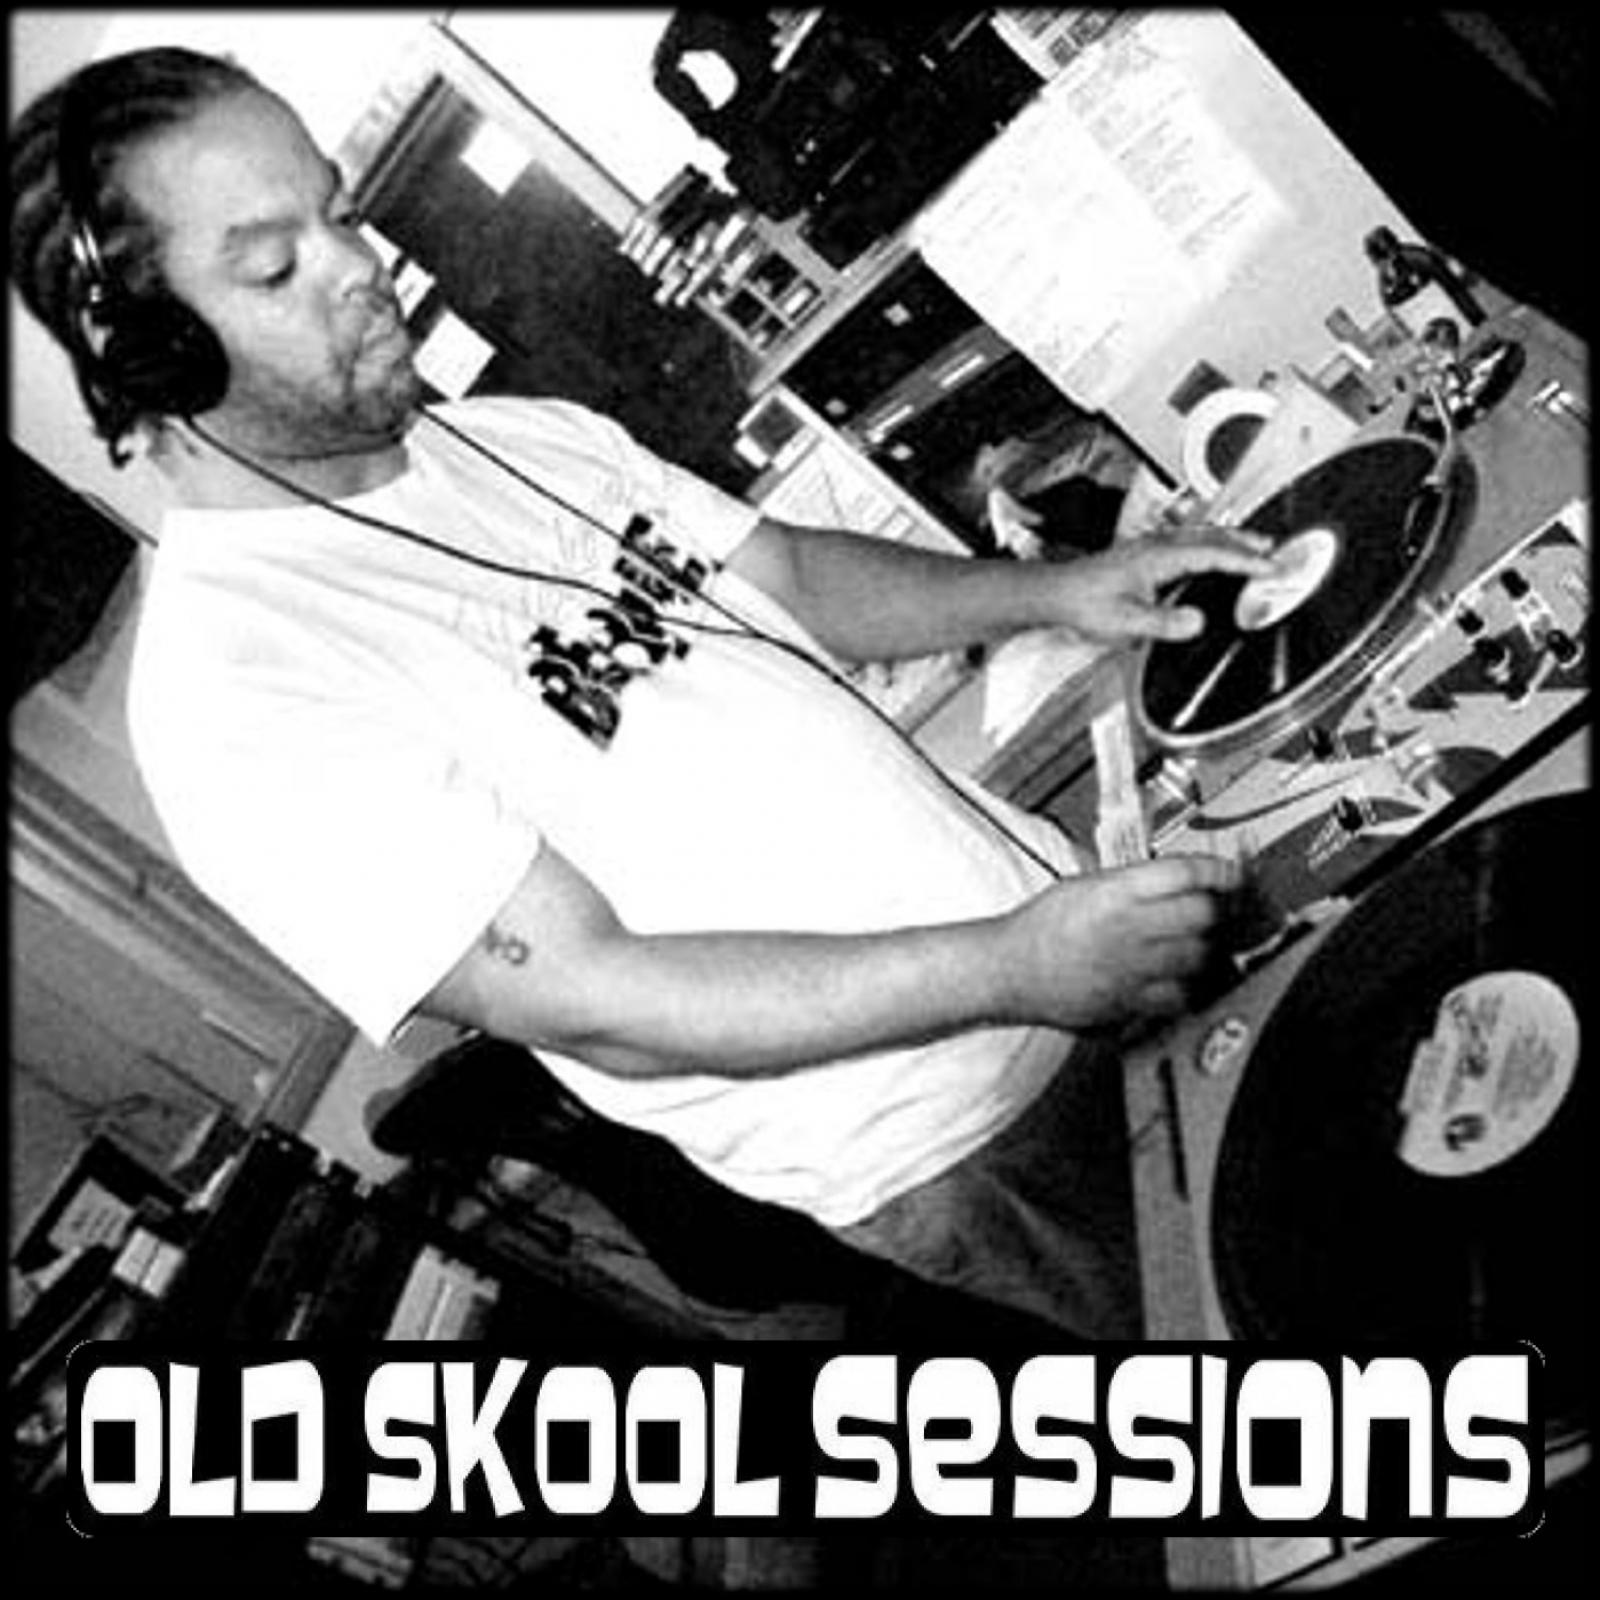 WJFF – Old Skool Sessions